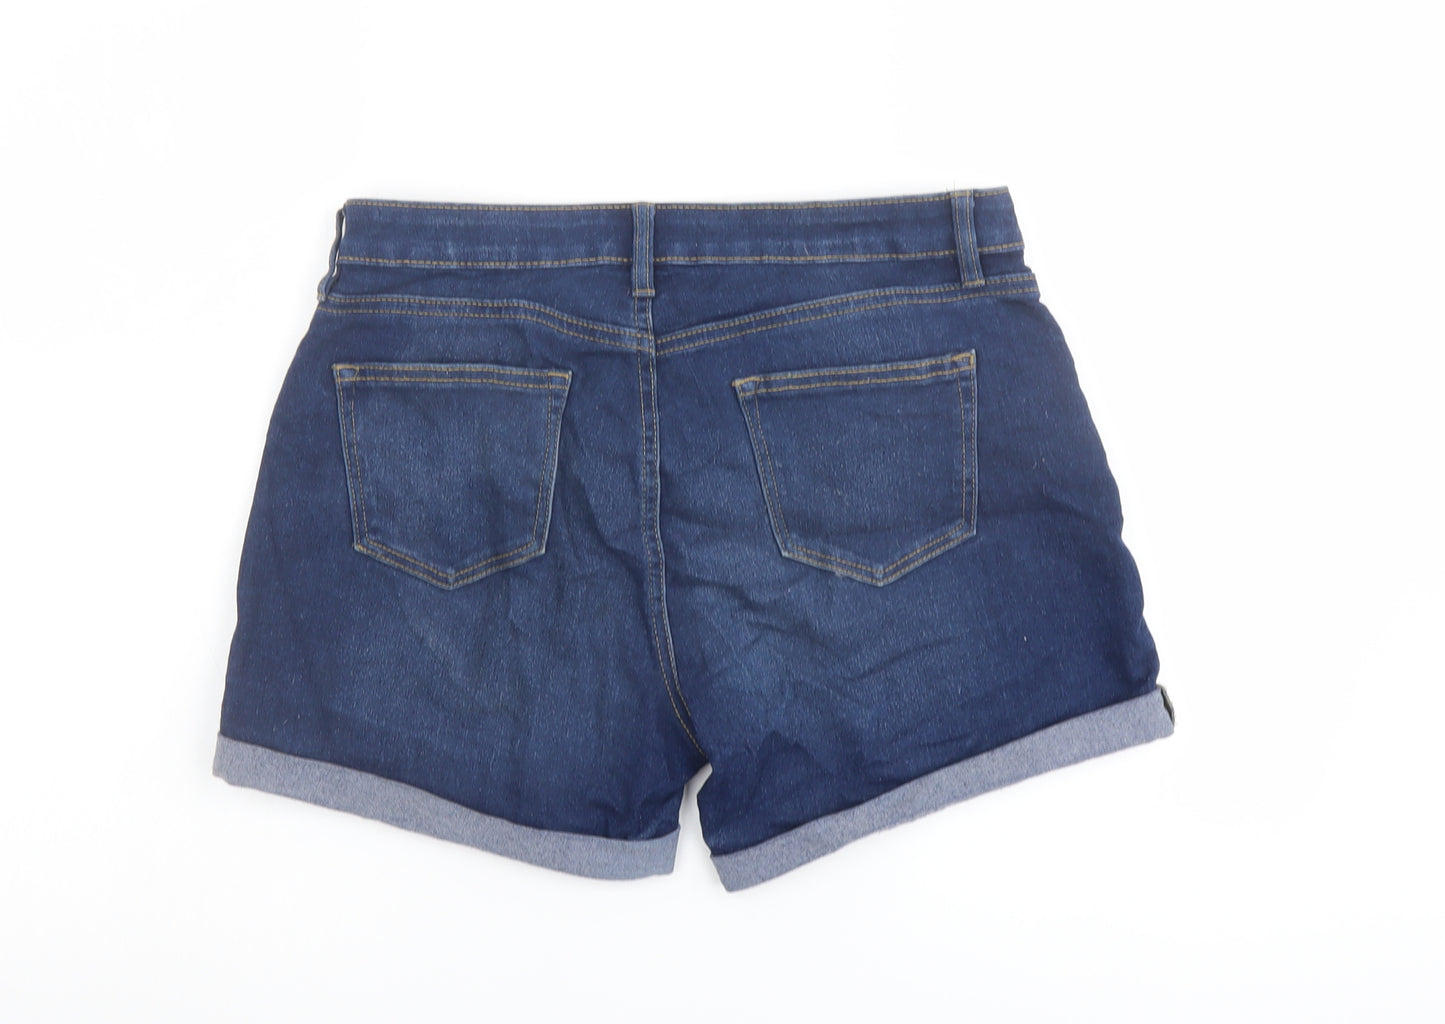 Denim & Co. Womens Blue Cotton Boyfriend Shorts Size 12 L4 in Regular Button